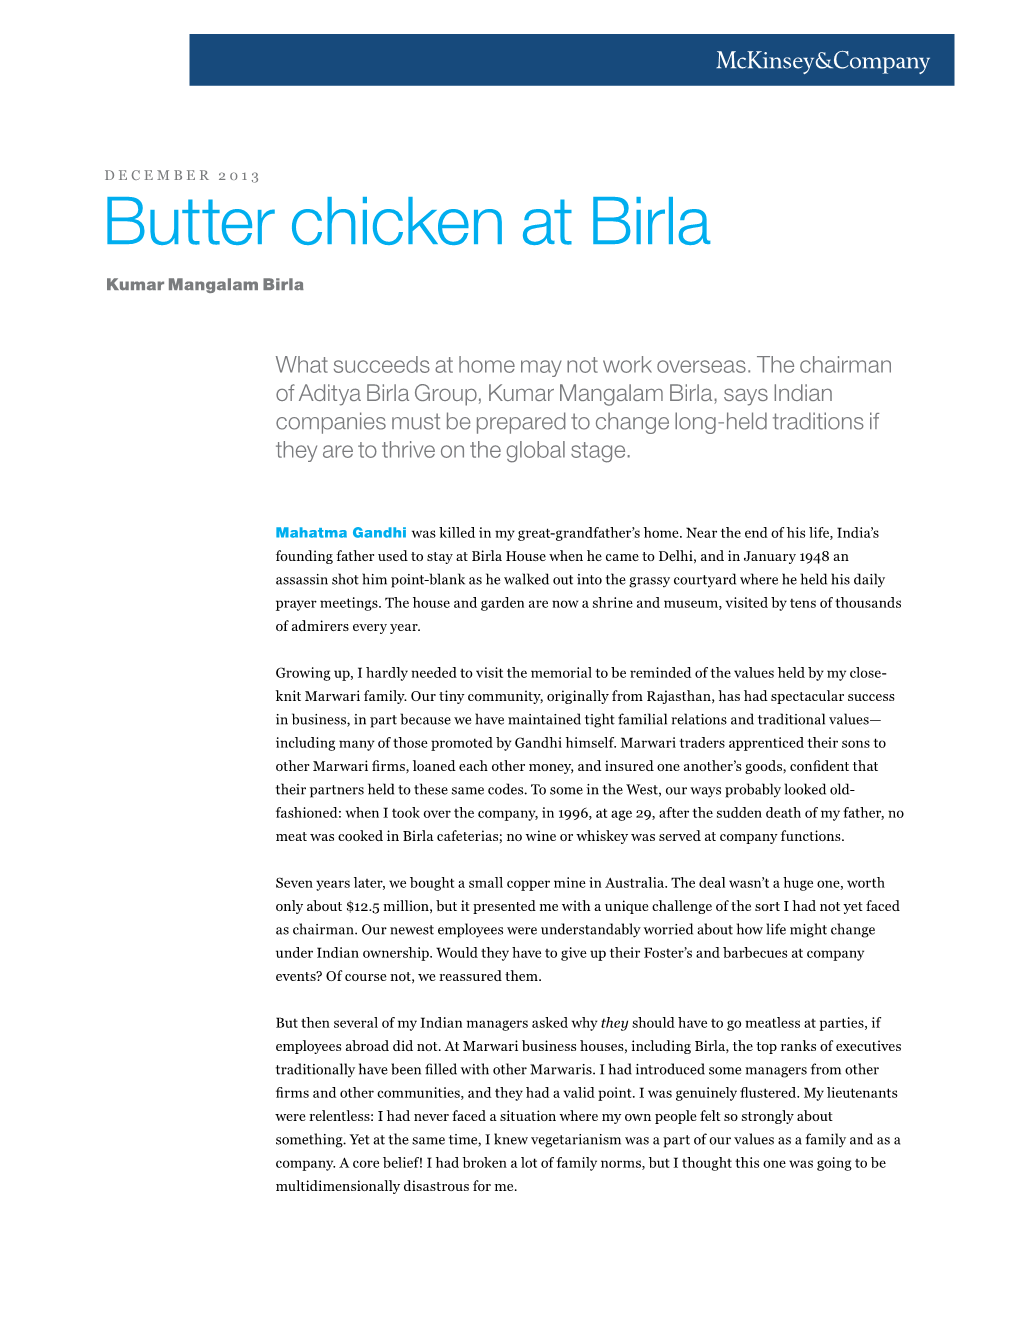 Butter Chicken at Birla